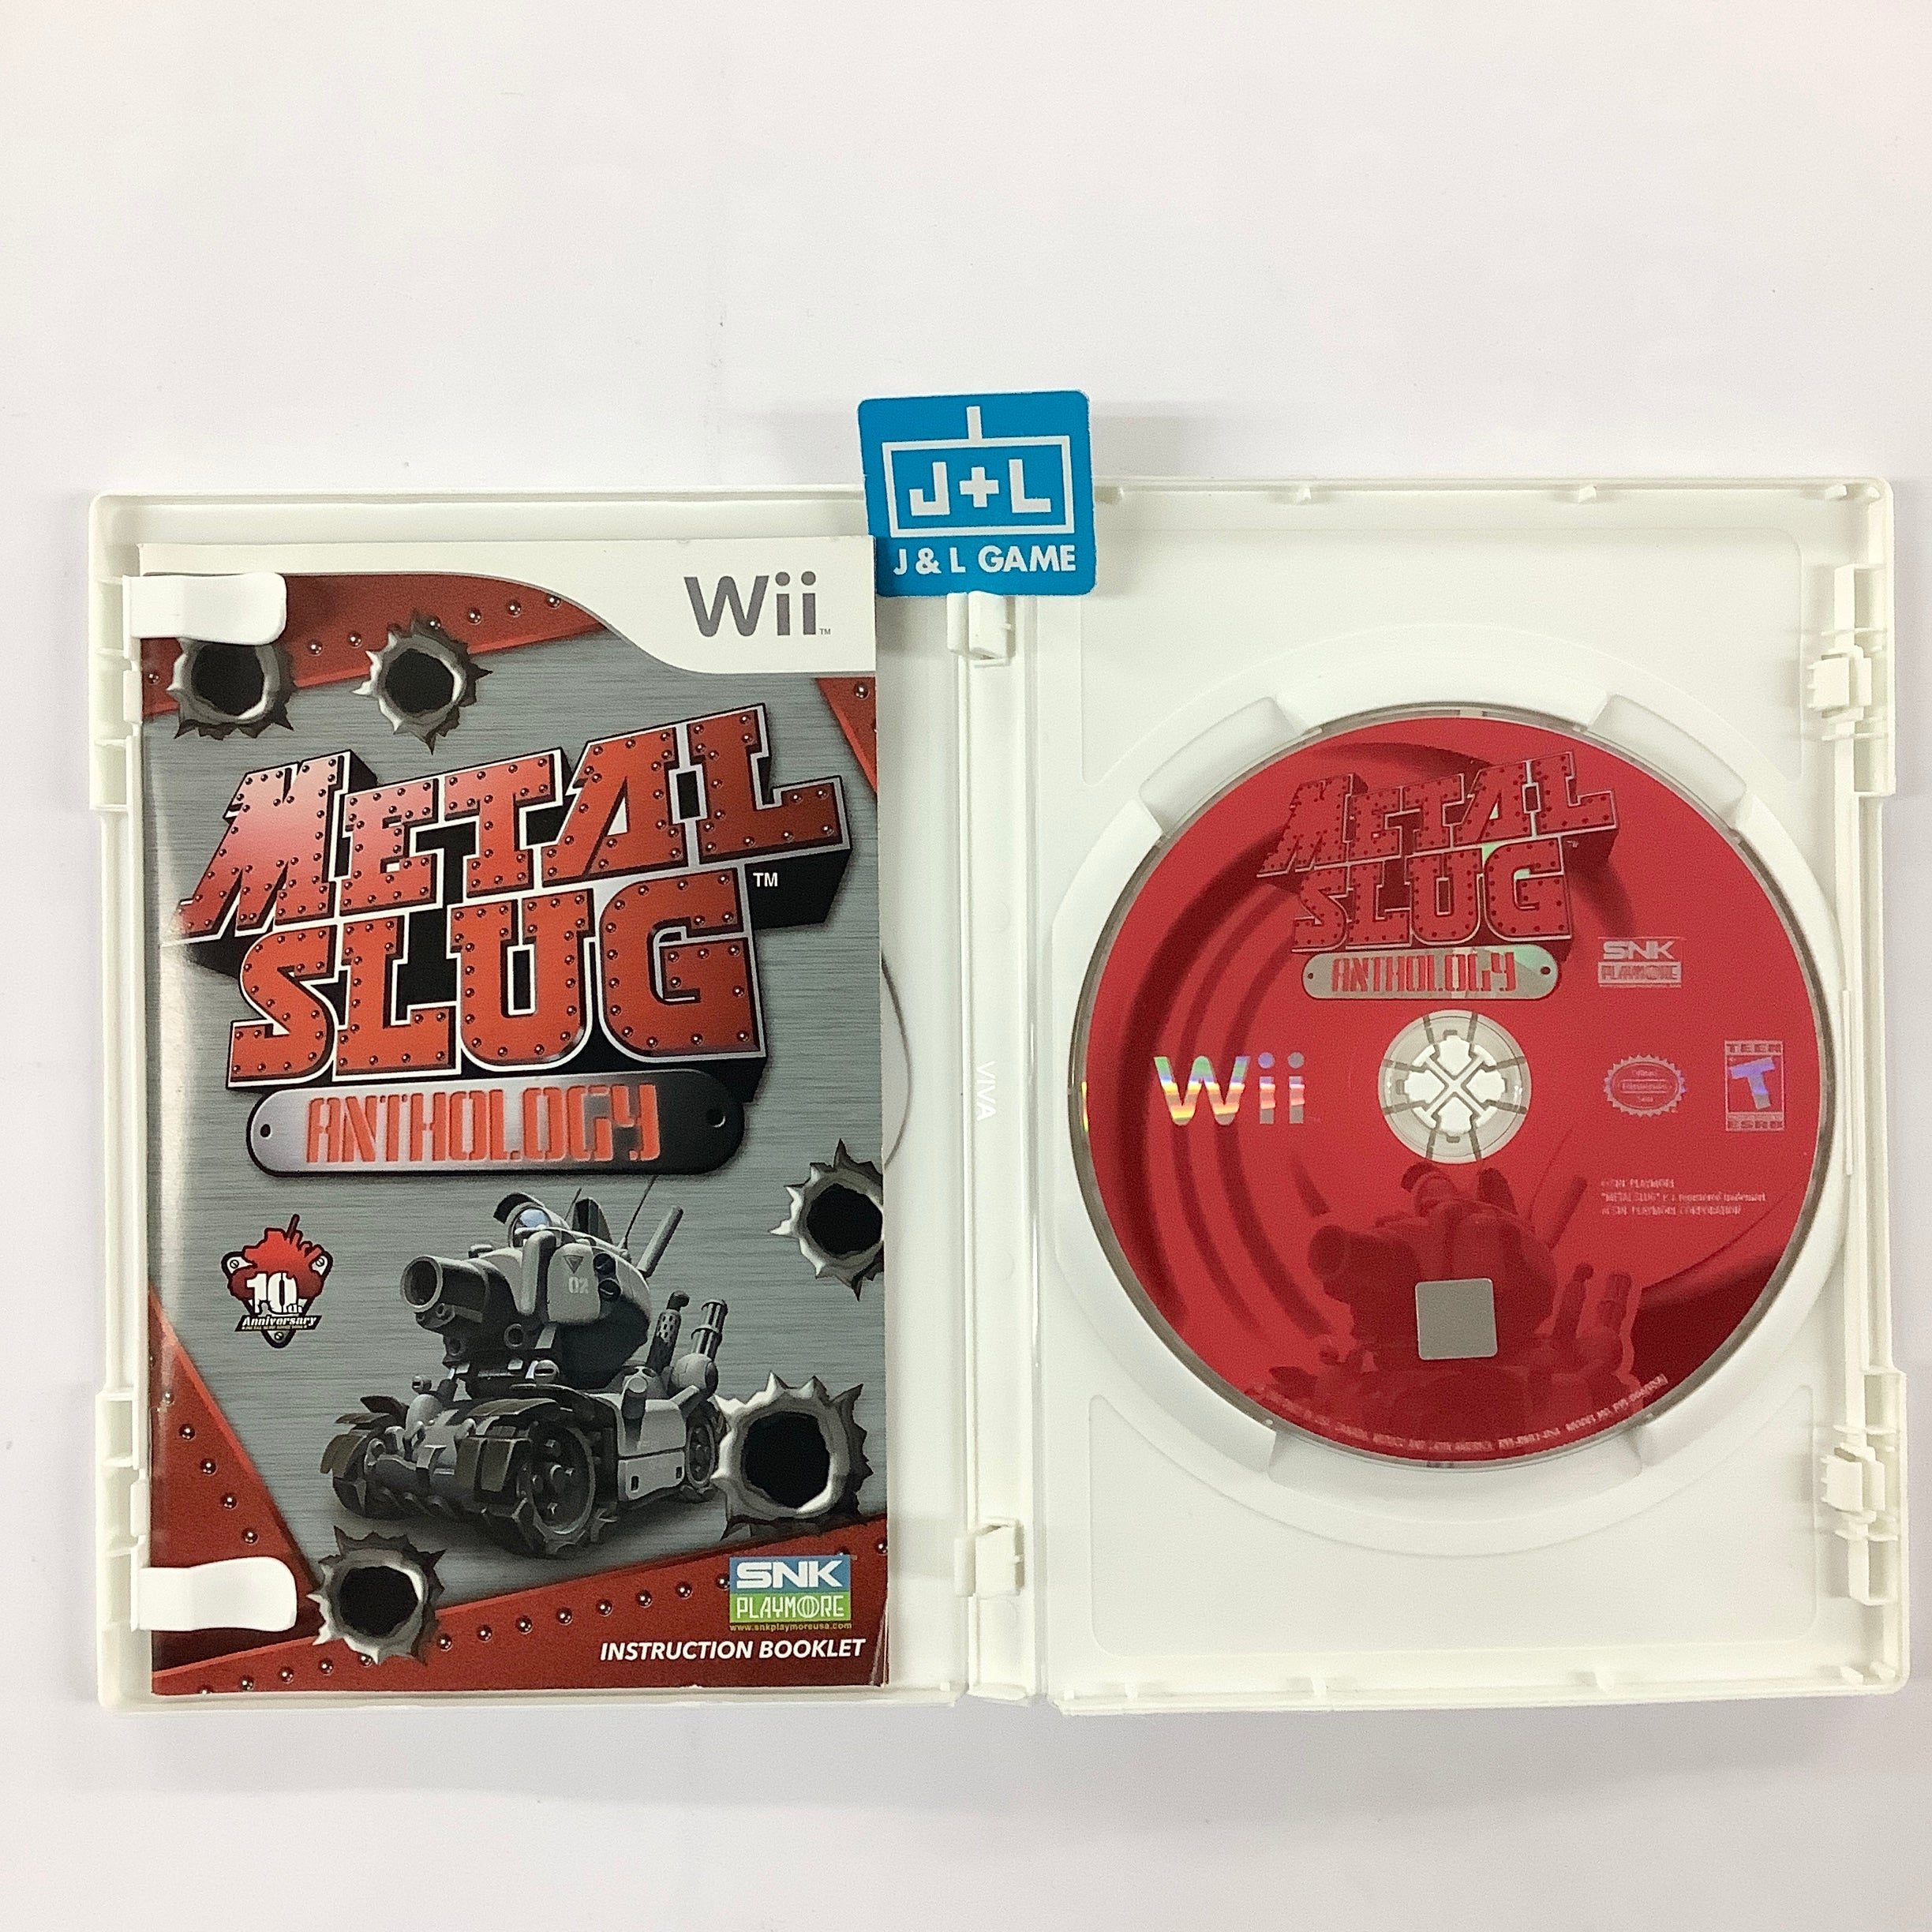 Metal Slug Anthology - Nintendo Wii [Pre-Owned] Video Games Ignition Entertainment   